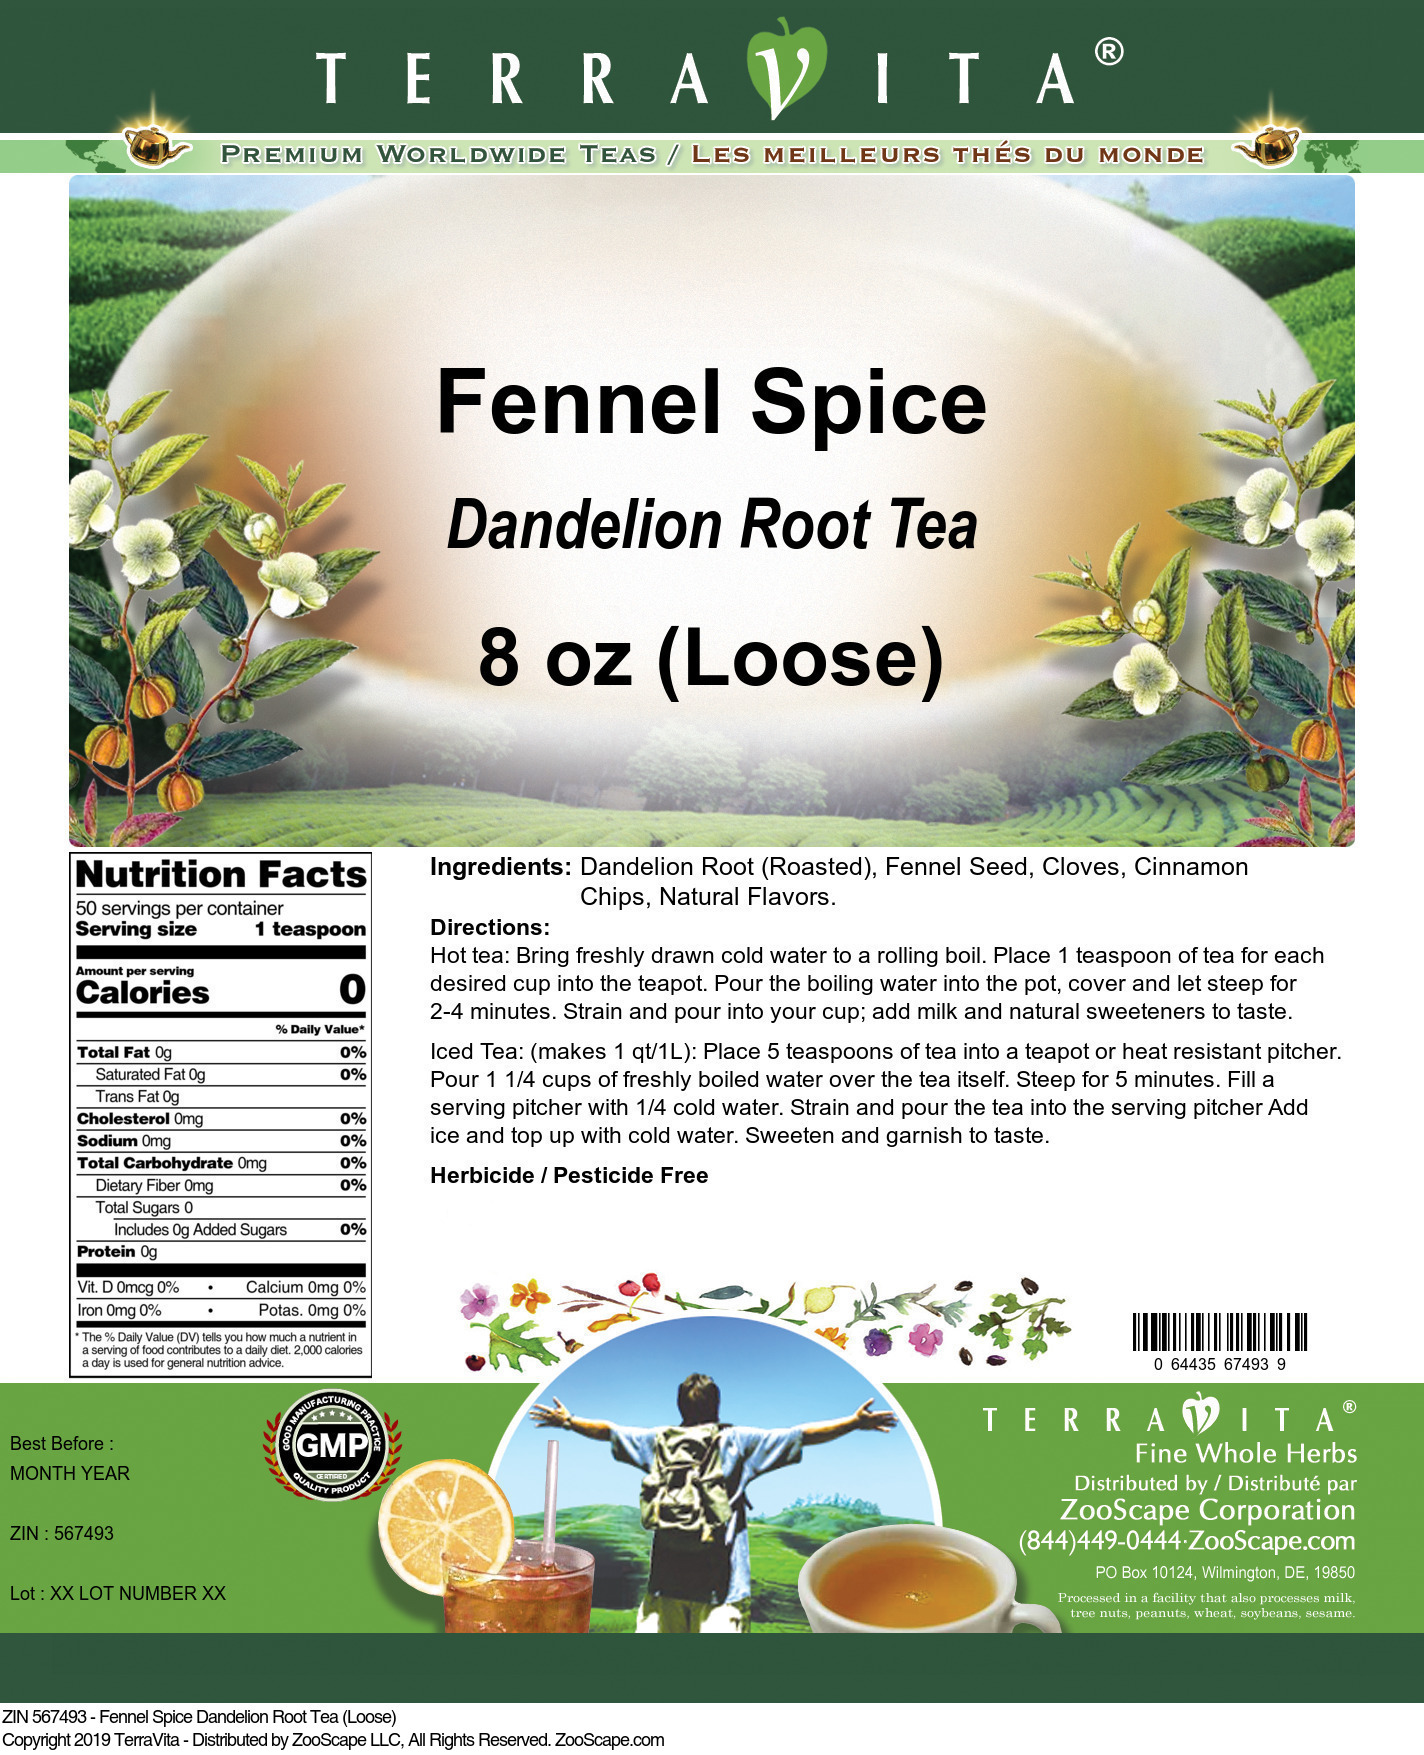 Fennel Spice Dandelion Root Tea (Loose) - Label